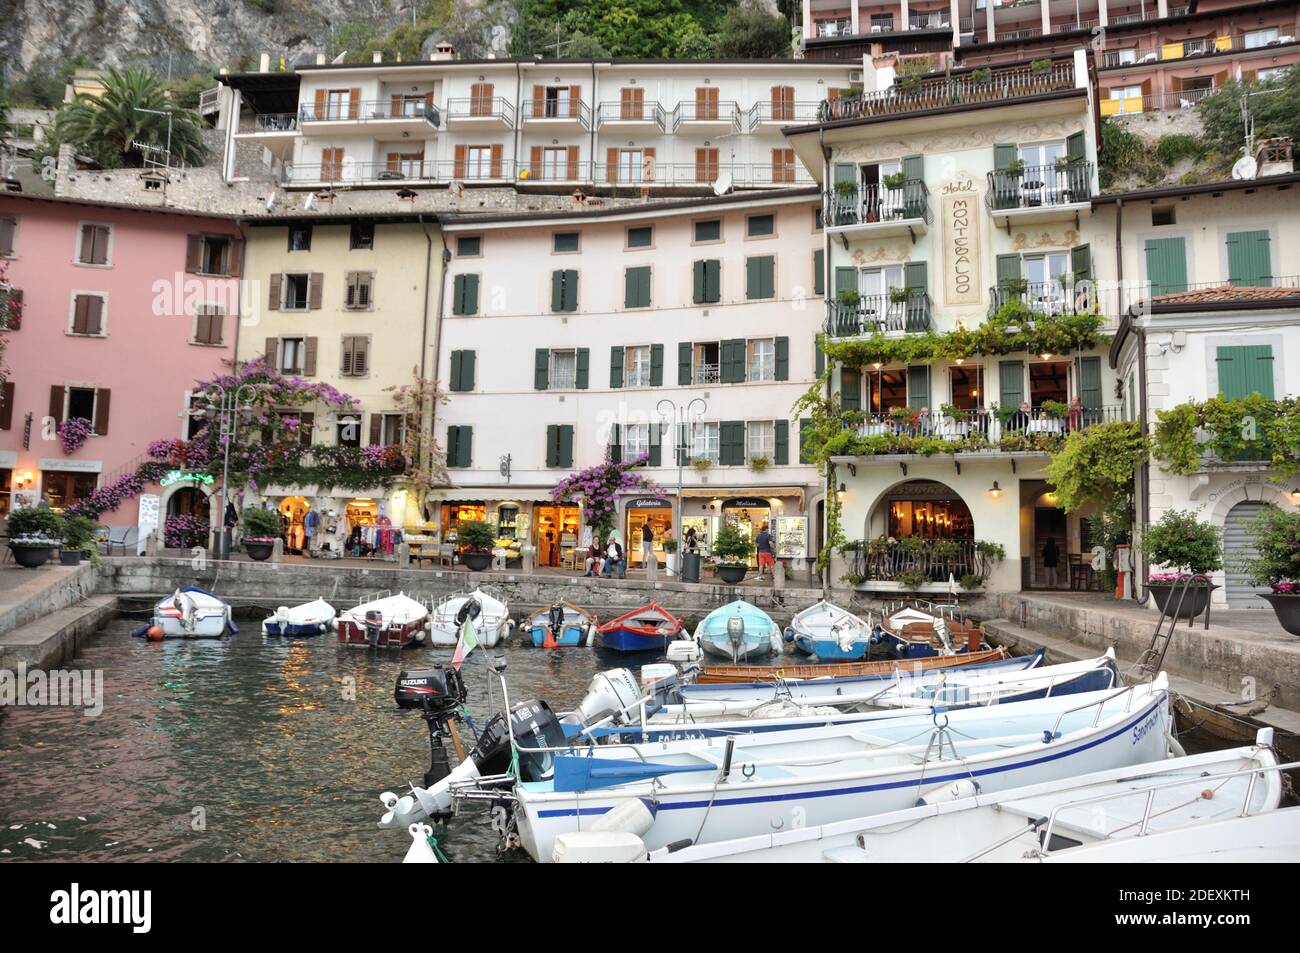 LIMONE SUL GARDA, ITALY - Sep 21, 2016: Beautiful buildings and boats at the harbour of Limone Sul Garda, at lake Lago di Garda, Italy Stock Photo